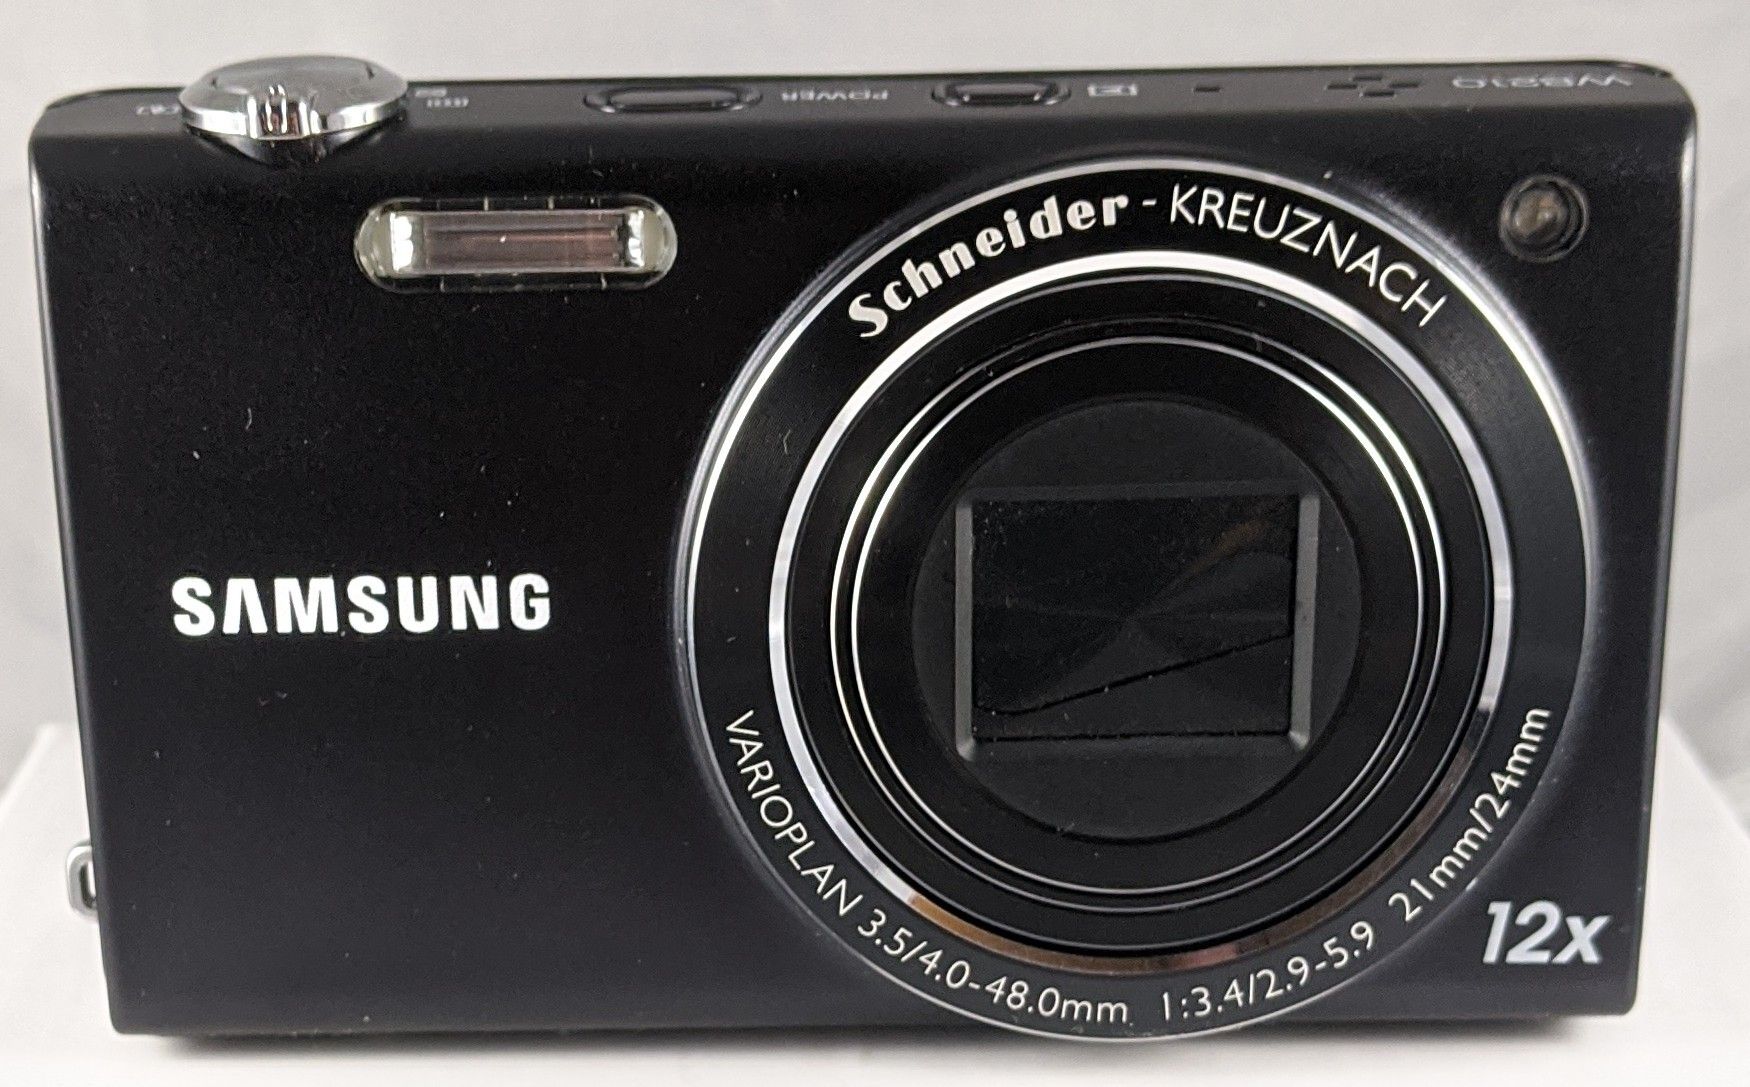 Samsung WB210 Compact Digital Camera